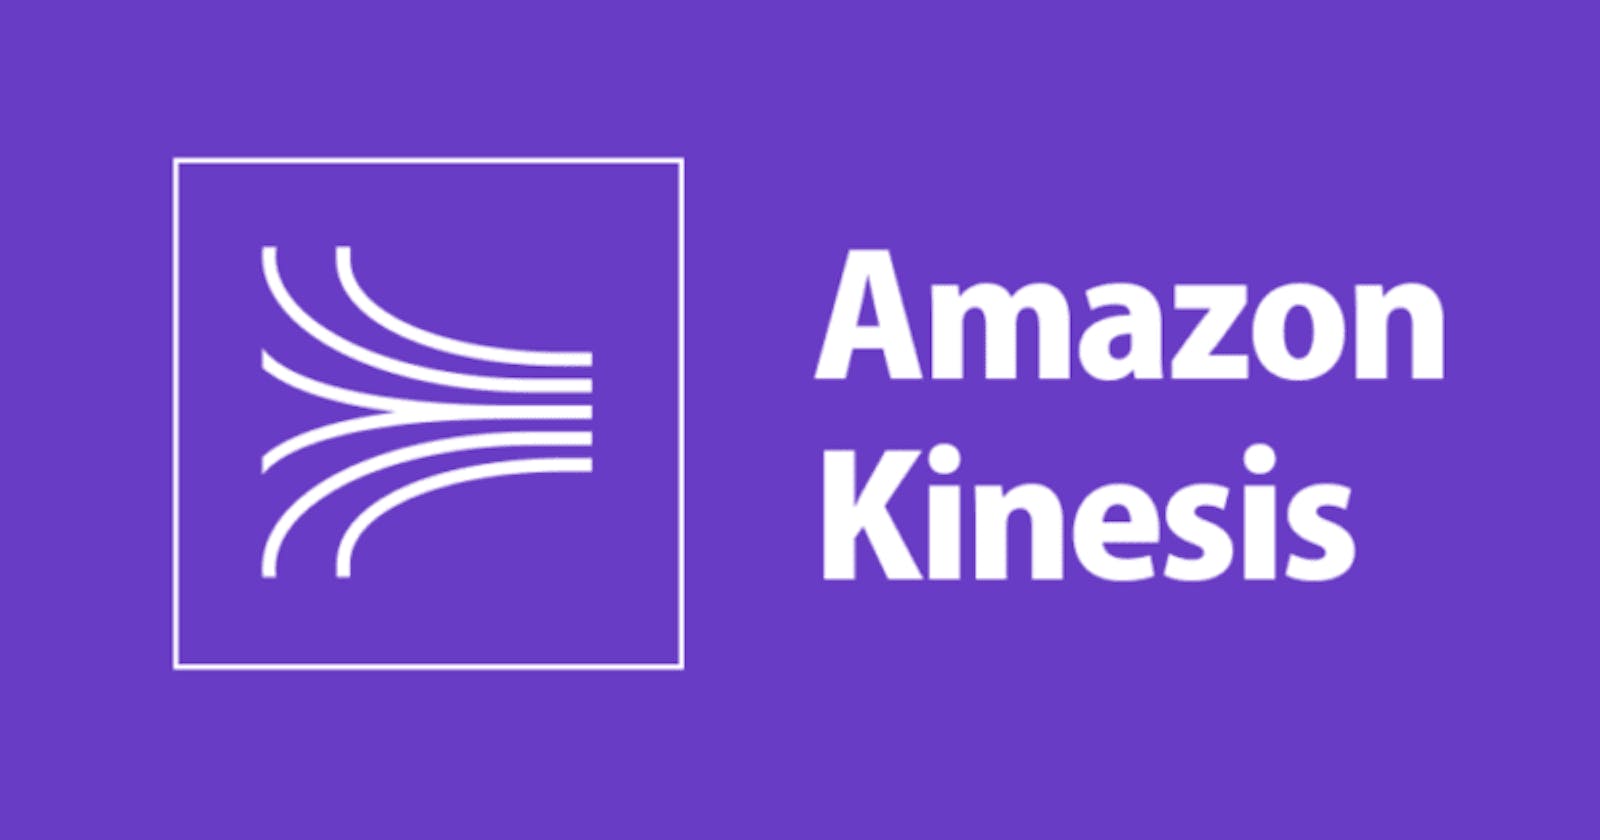 Introduction to Amazon Kinesis